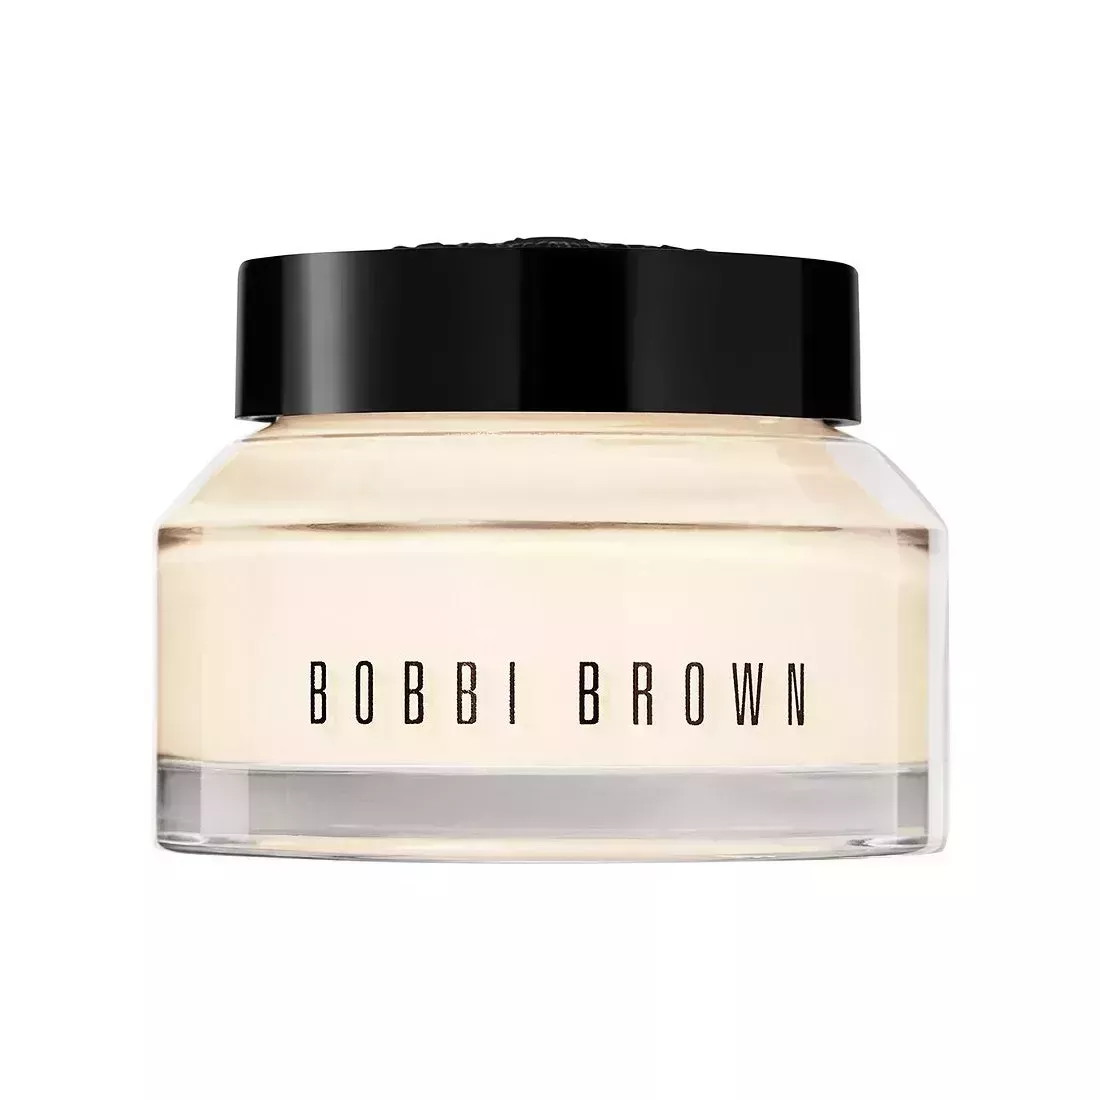 Bobbi Brown Vitamin Enriched Face Base on white background